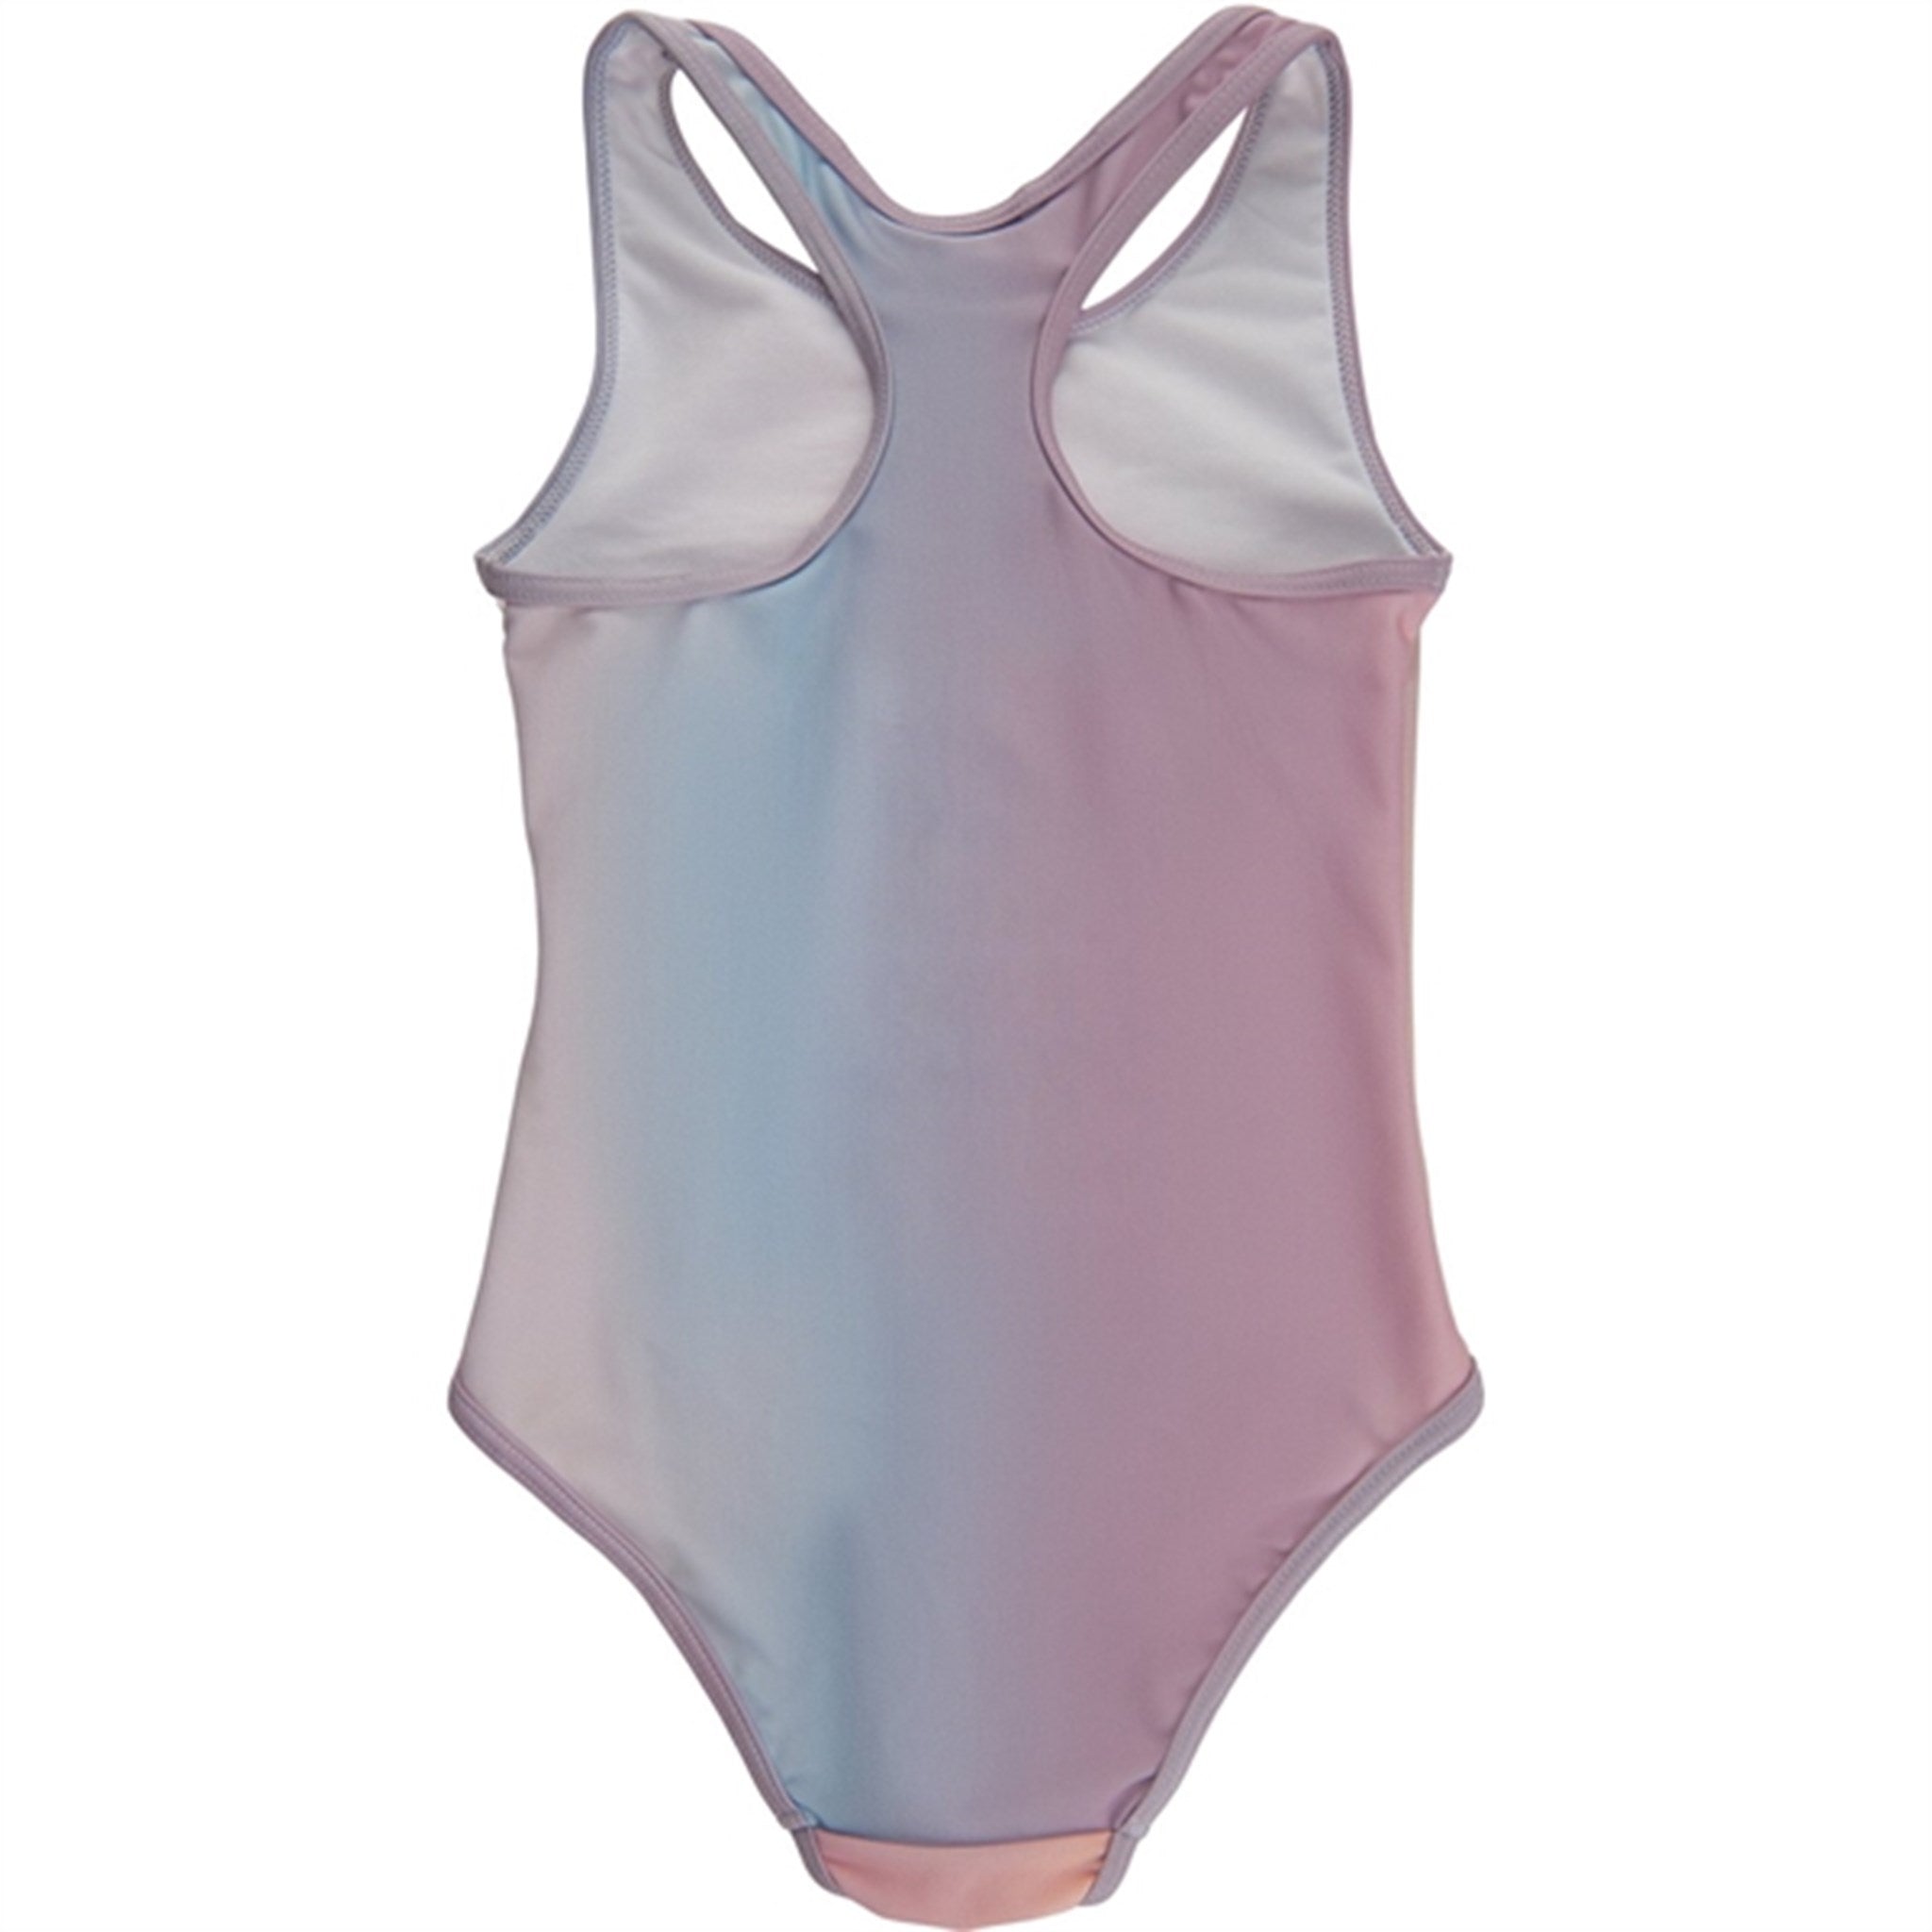 THE NEW Digital Gradient Fabienne Swimsuit 2